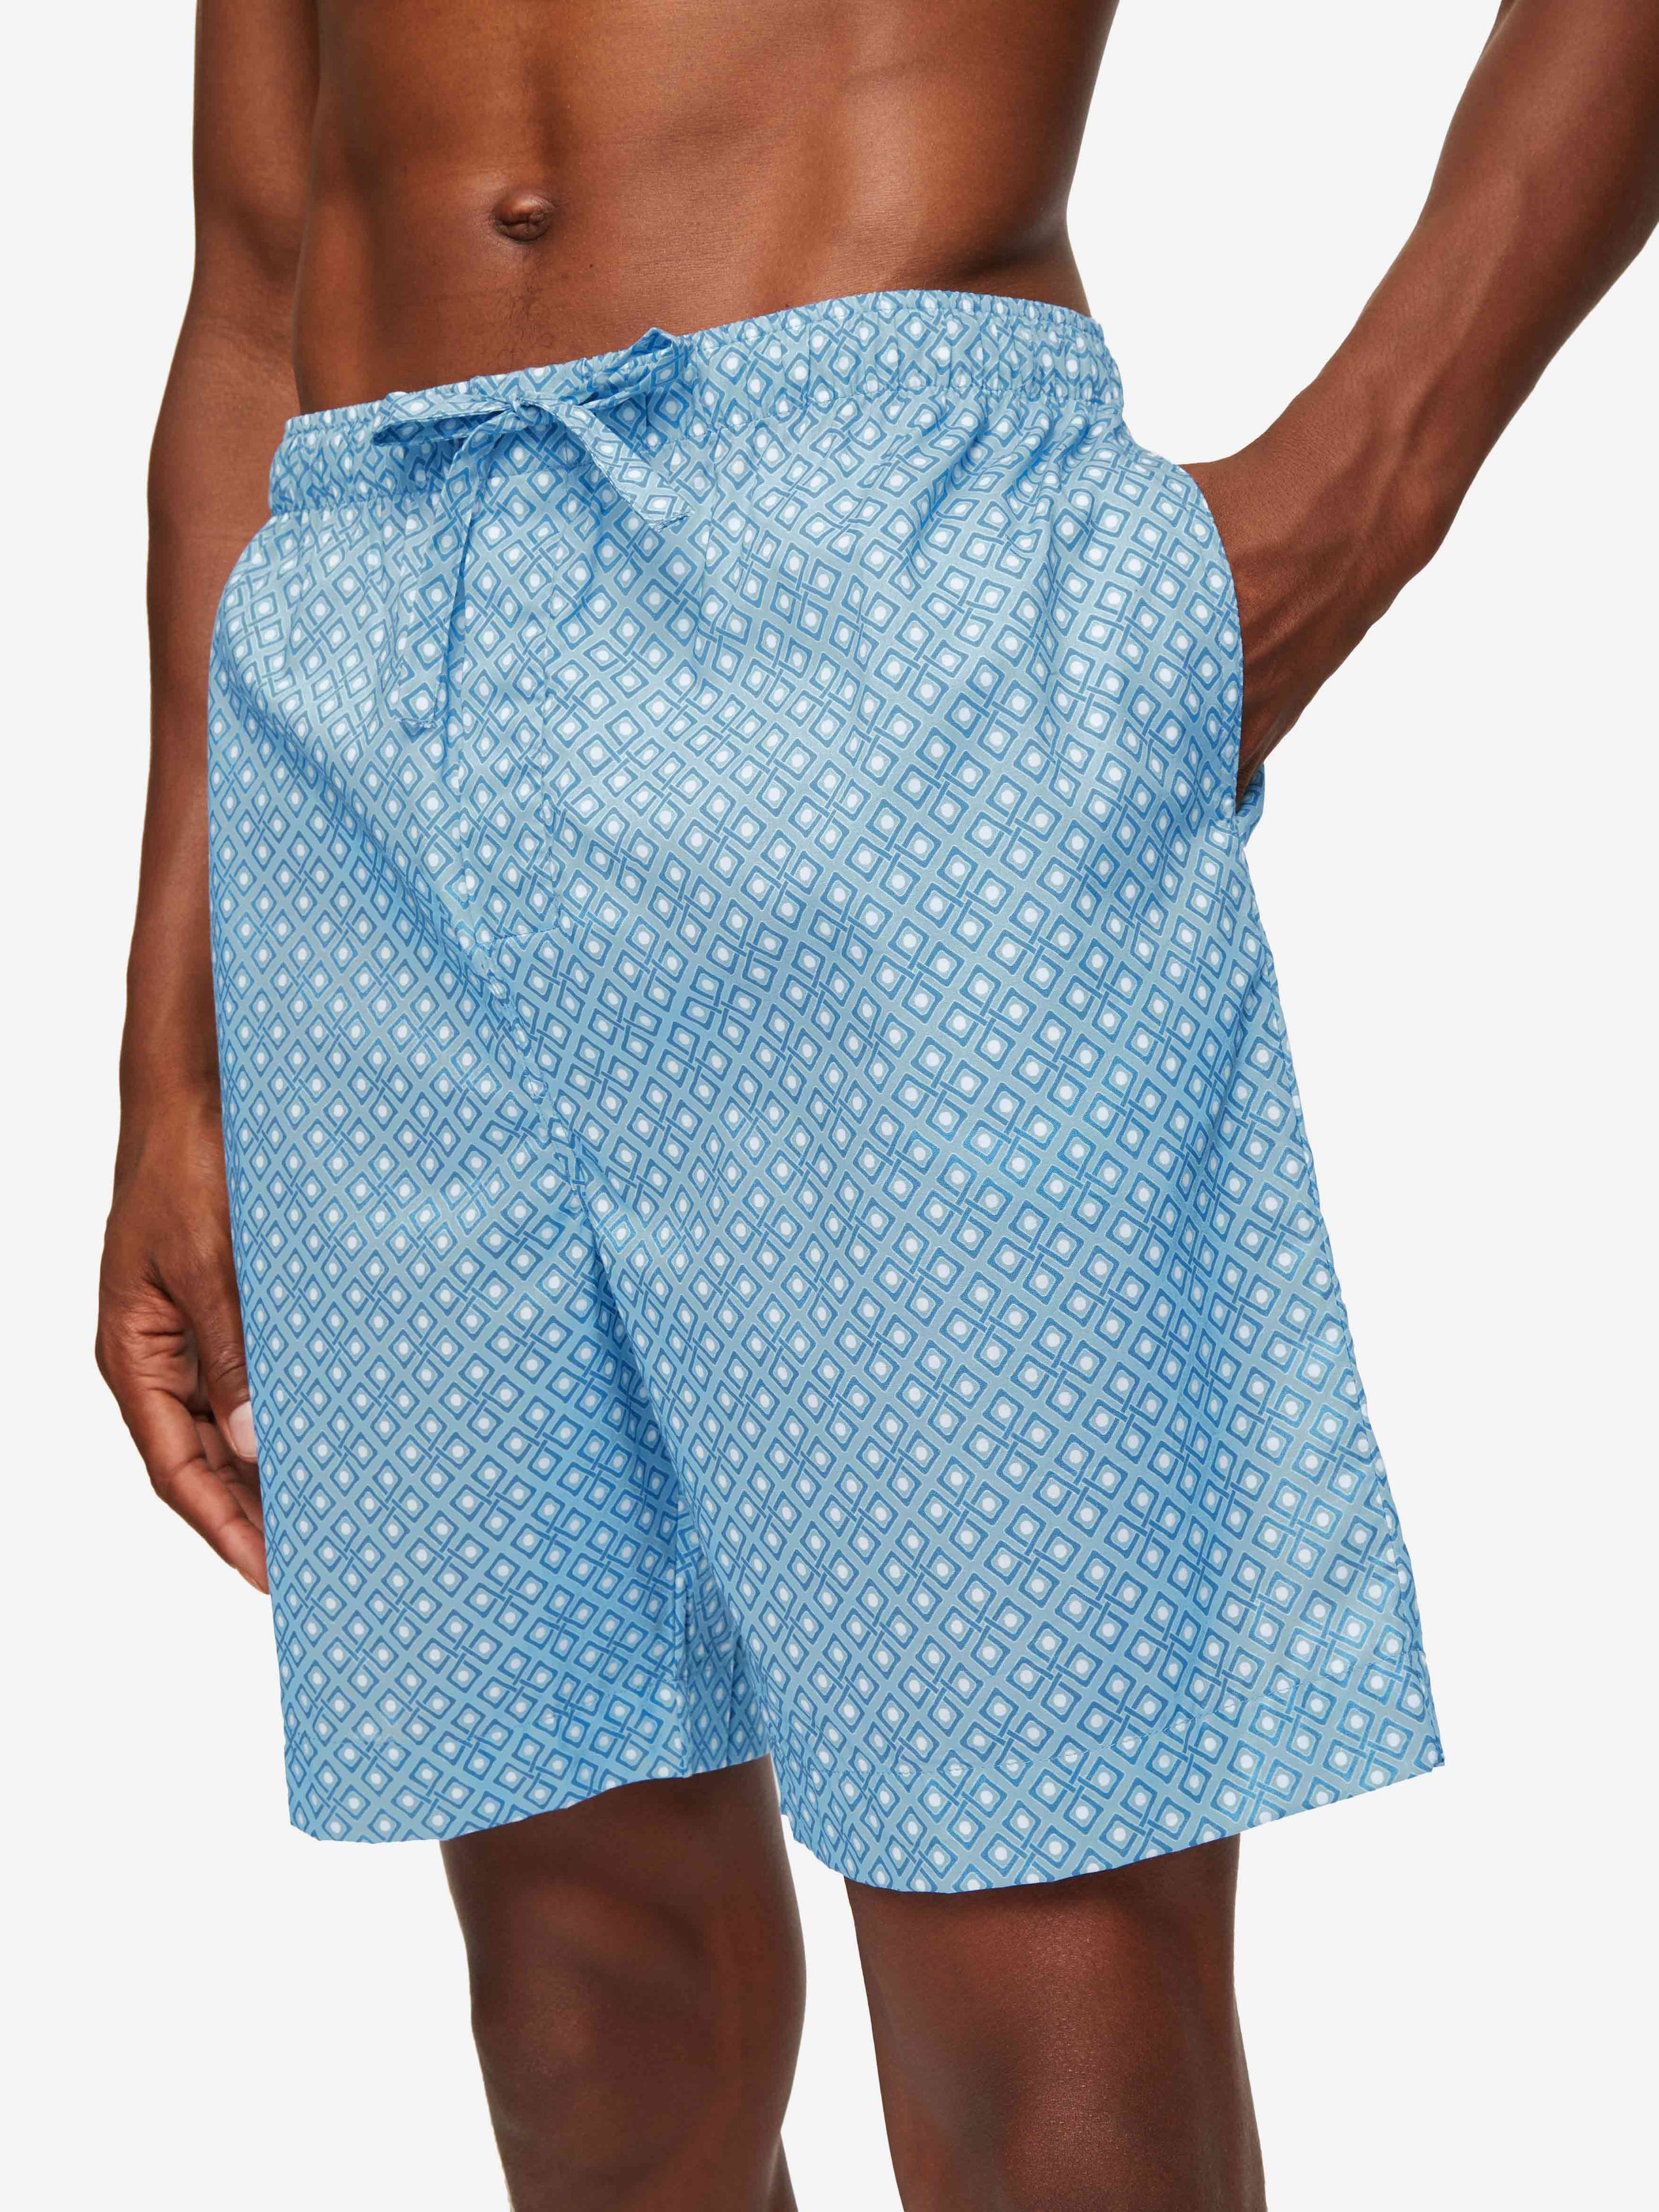 Men's Lounge Shorts Ledbury 56 Cotton Batiste Blue